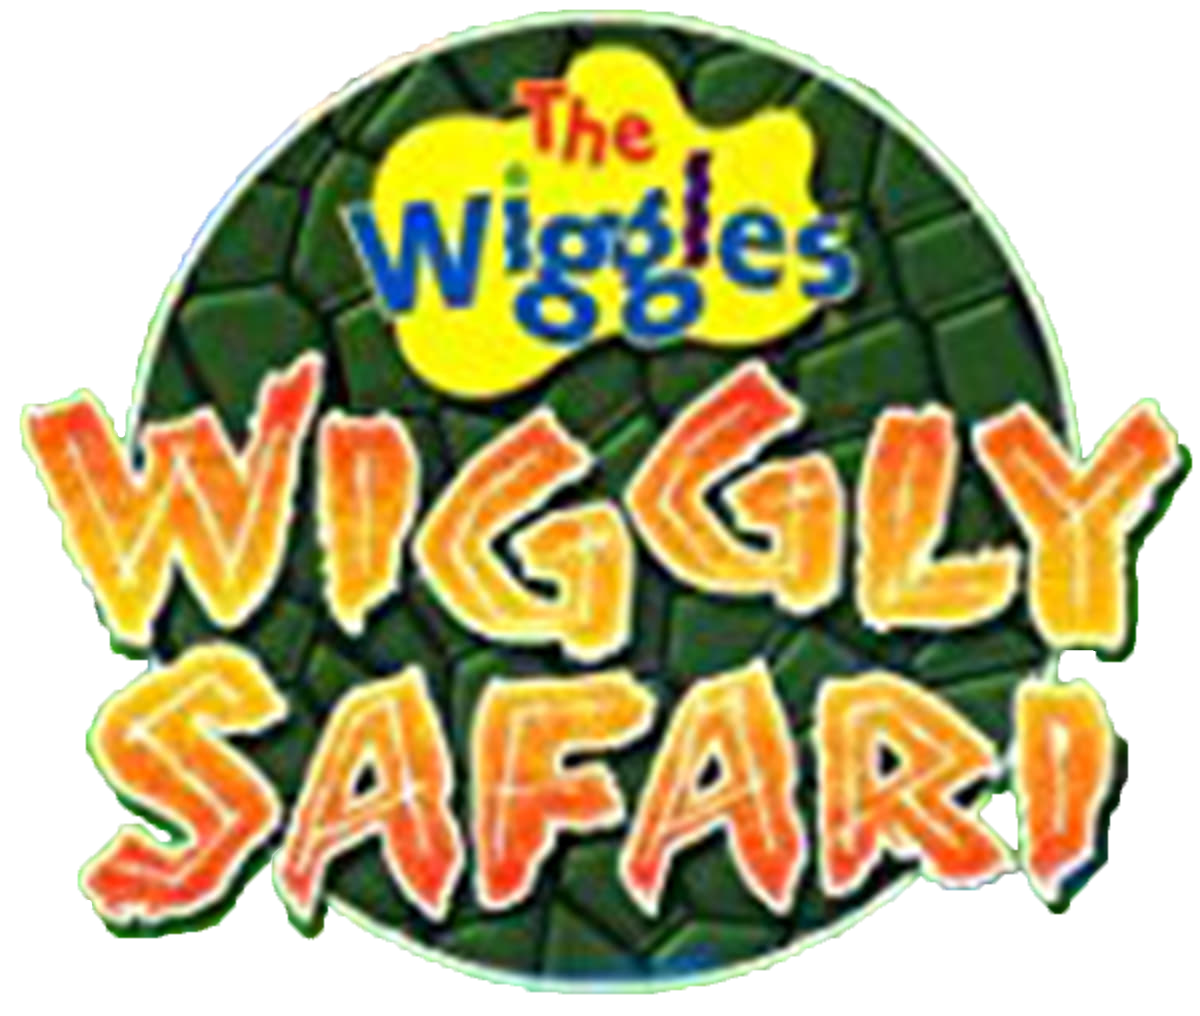 wiggly safari fandom